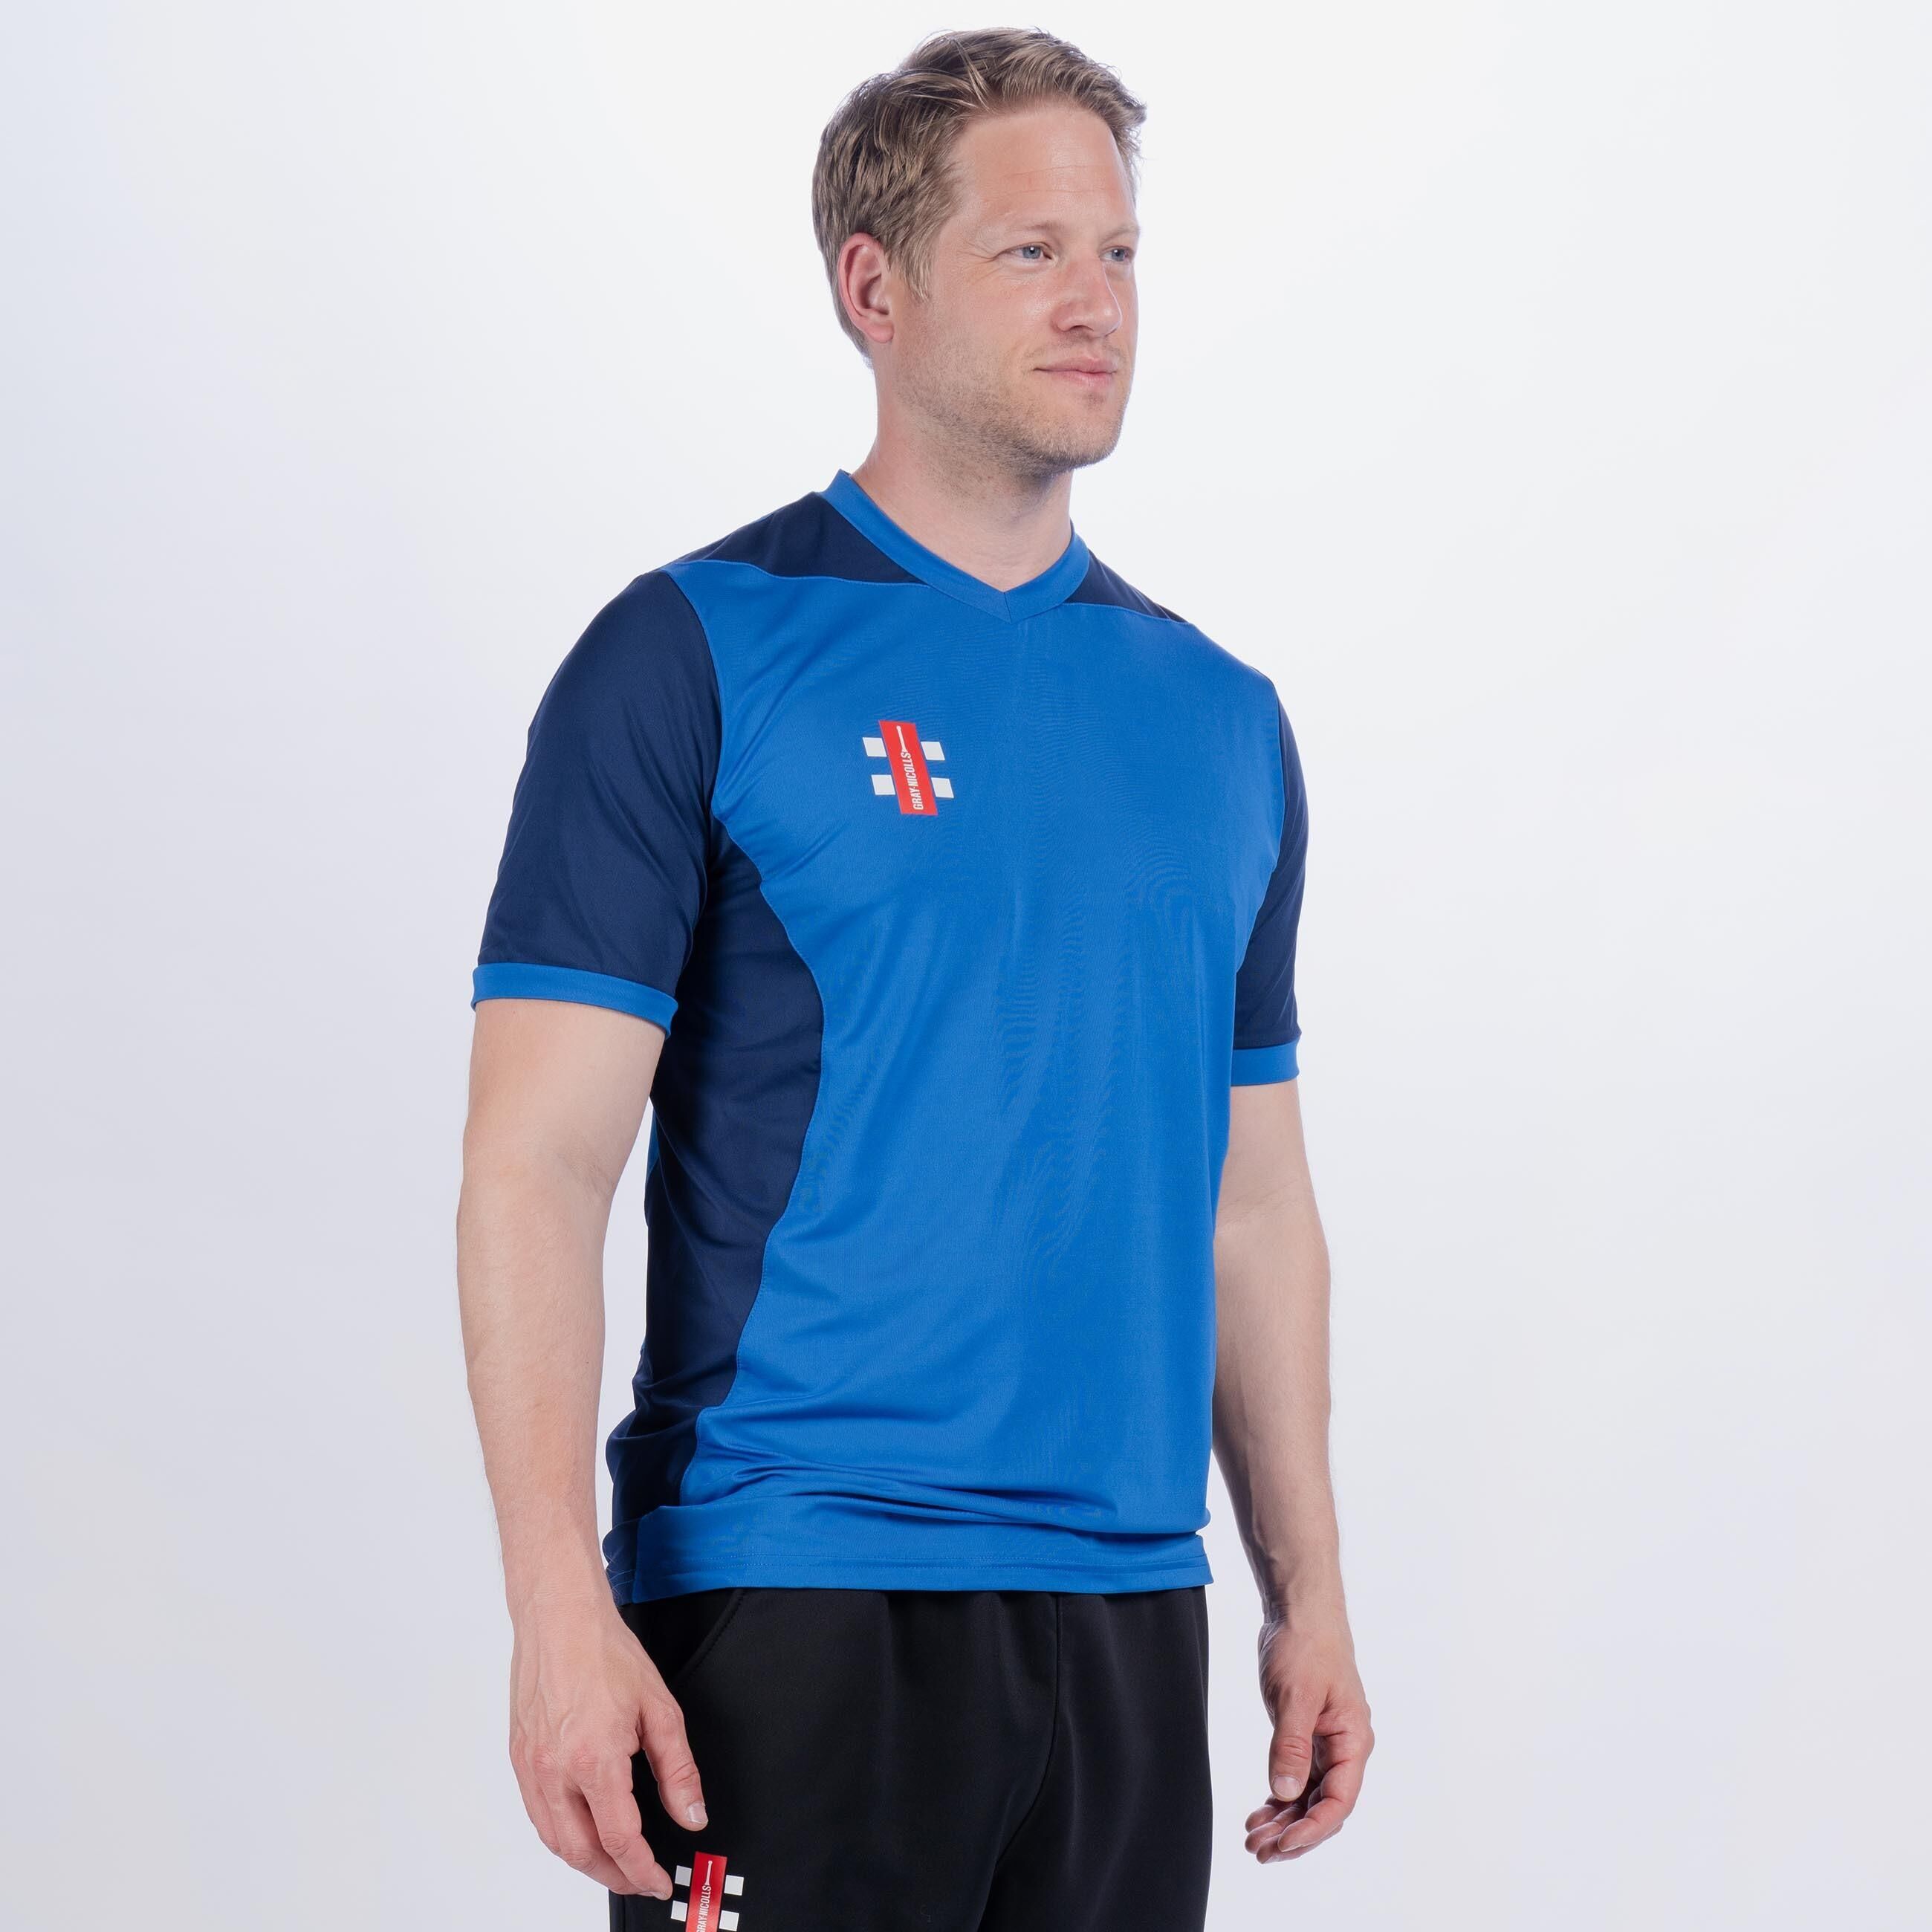 GRAY-NICOLLS Pro Performance T20 Short Sleeve Shirt, Royal / Navy, Junior